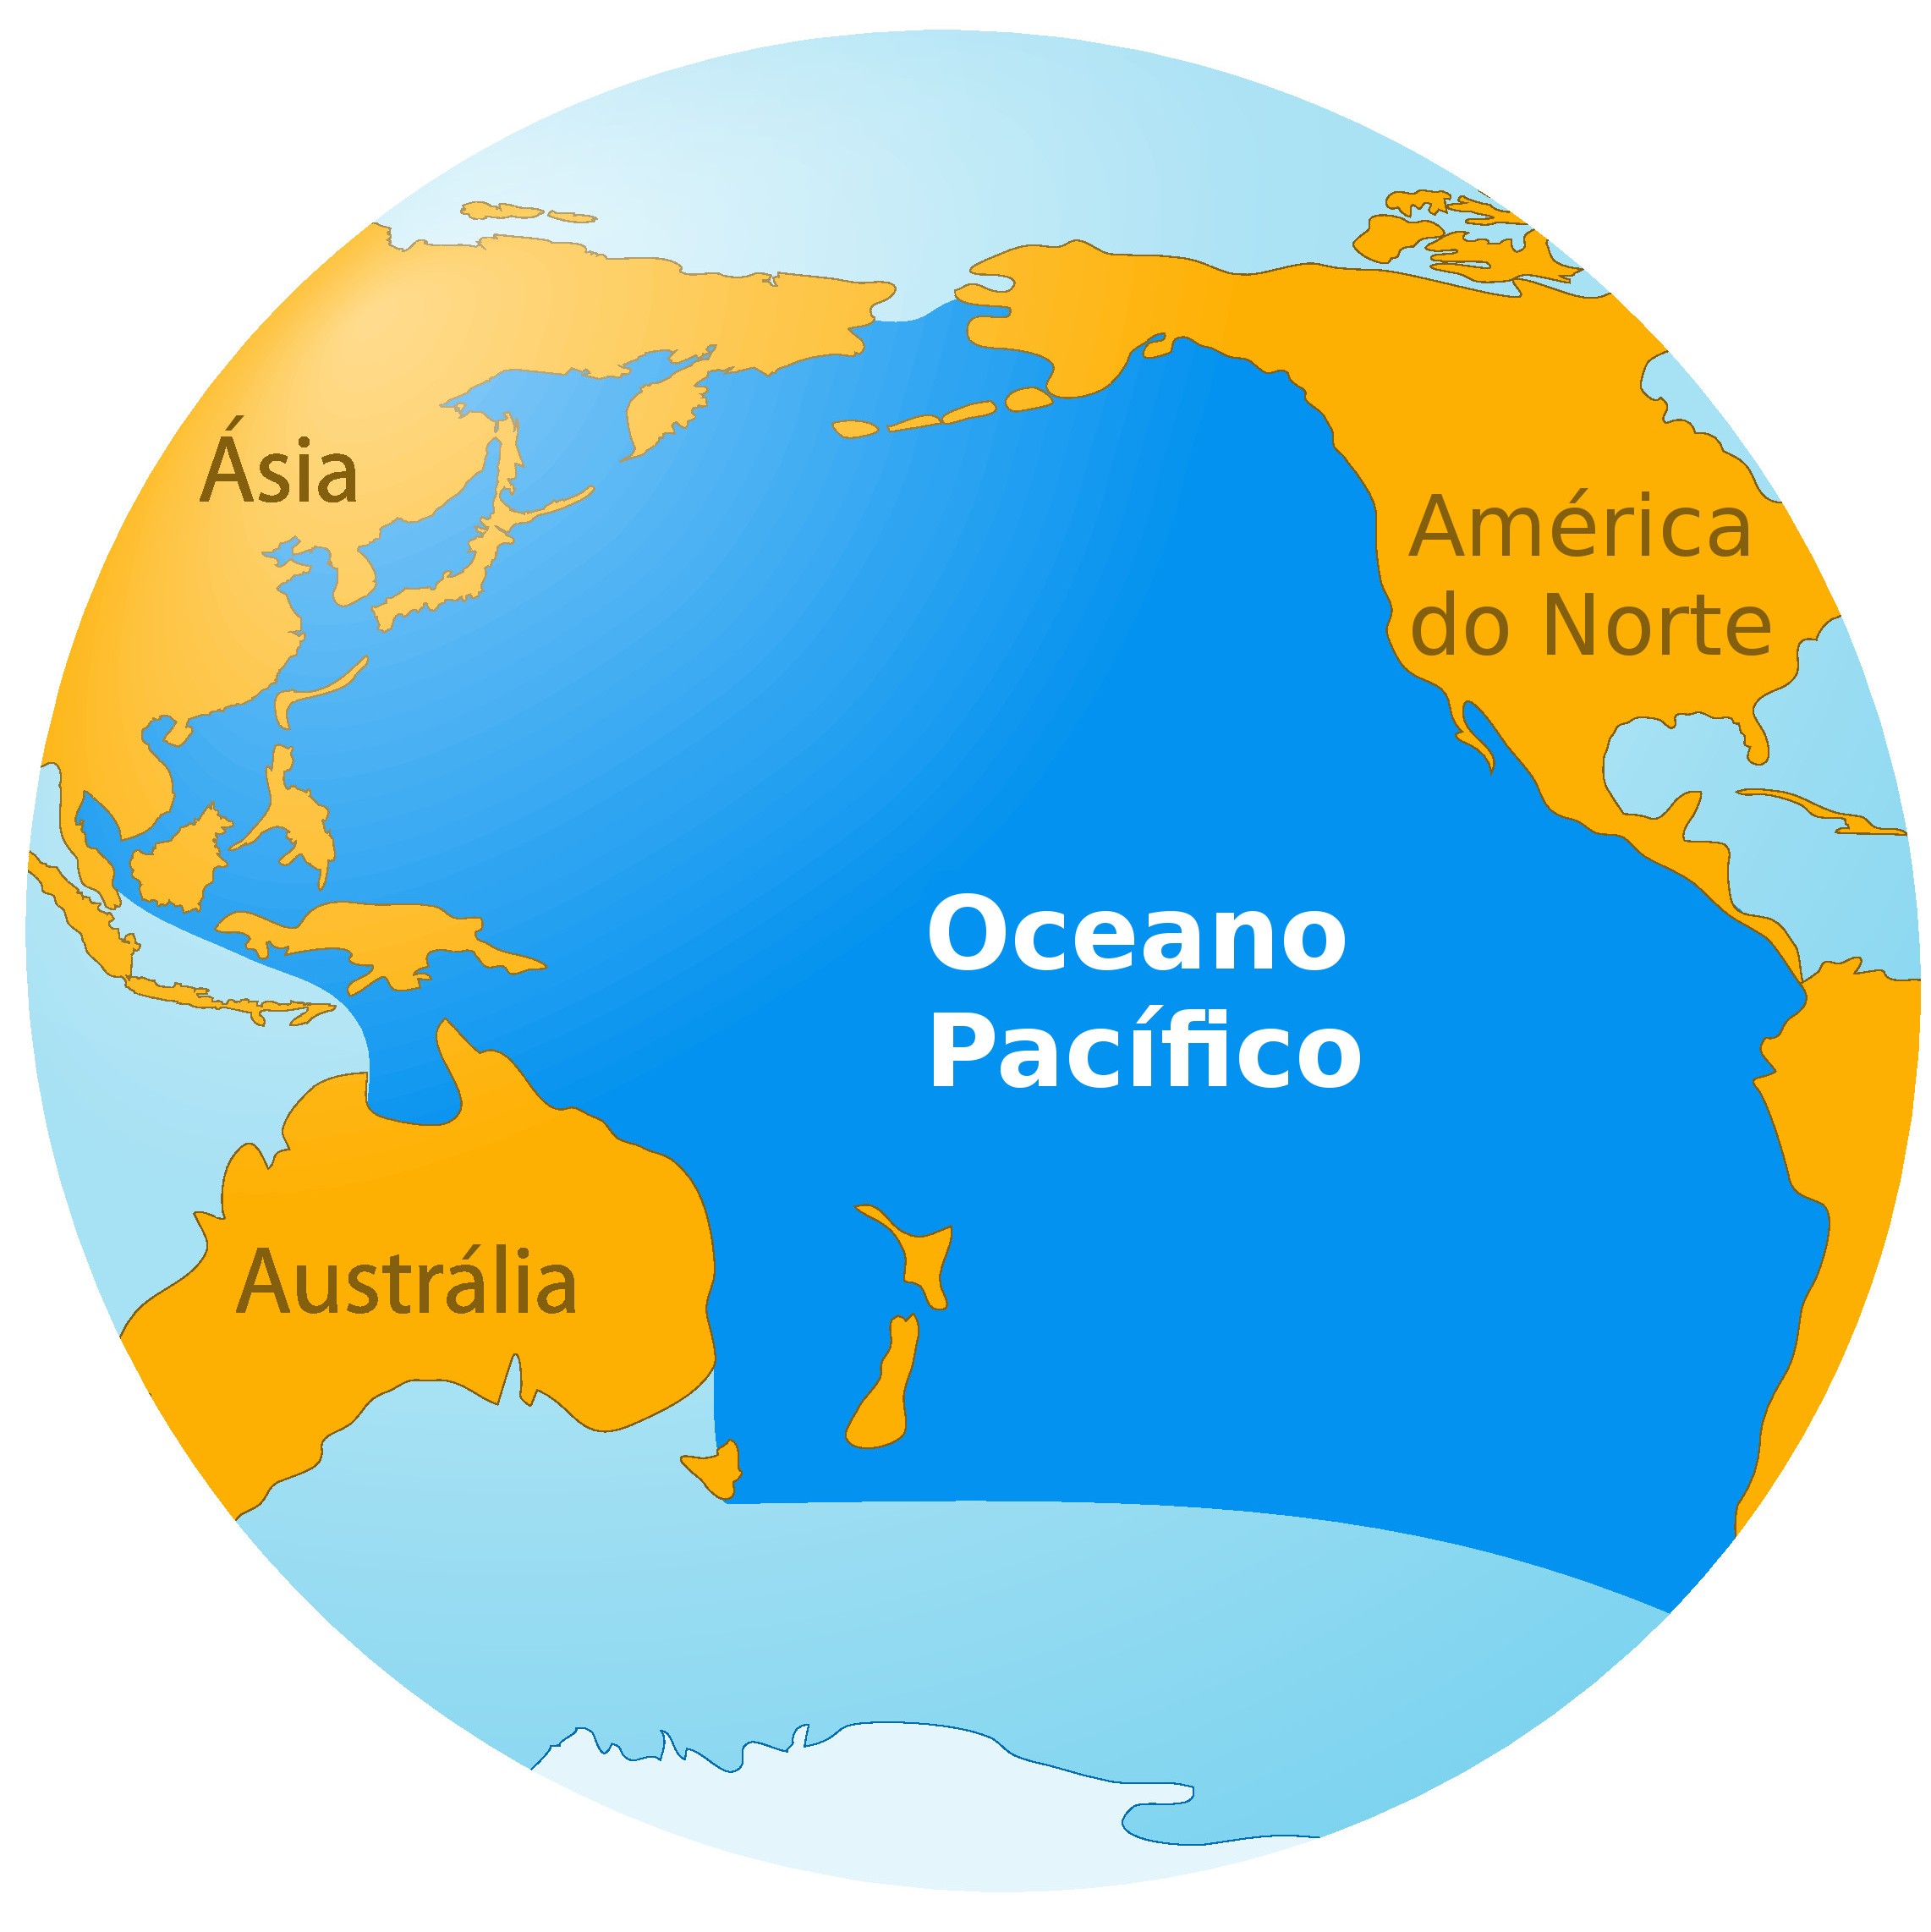 Oceano Pacifico - Geografia - Infoescola